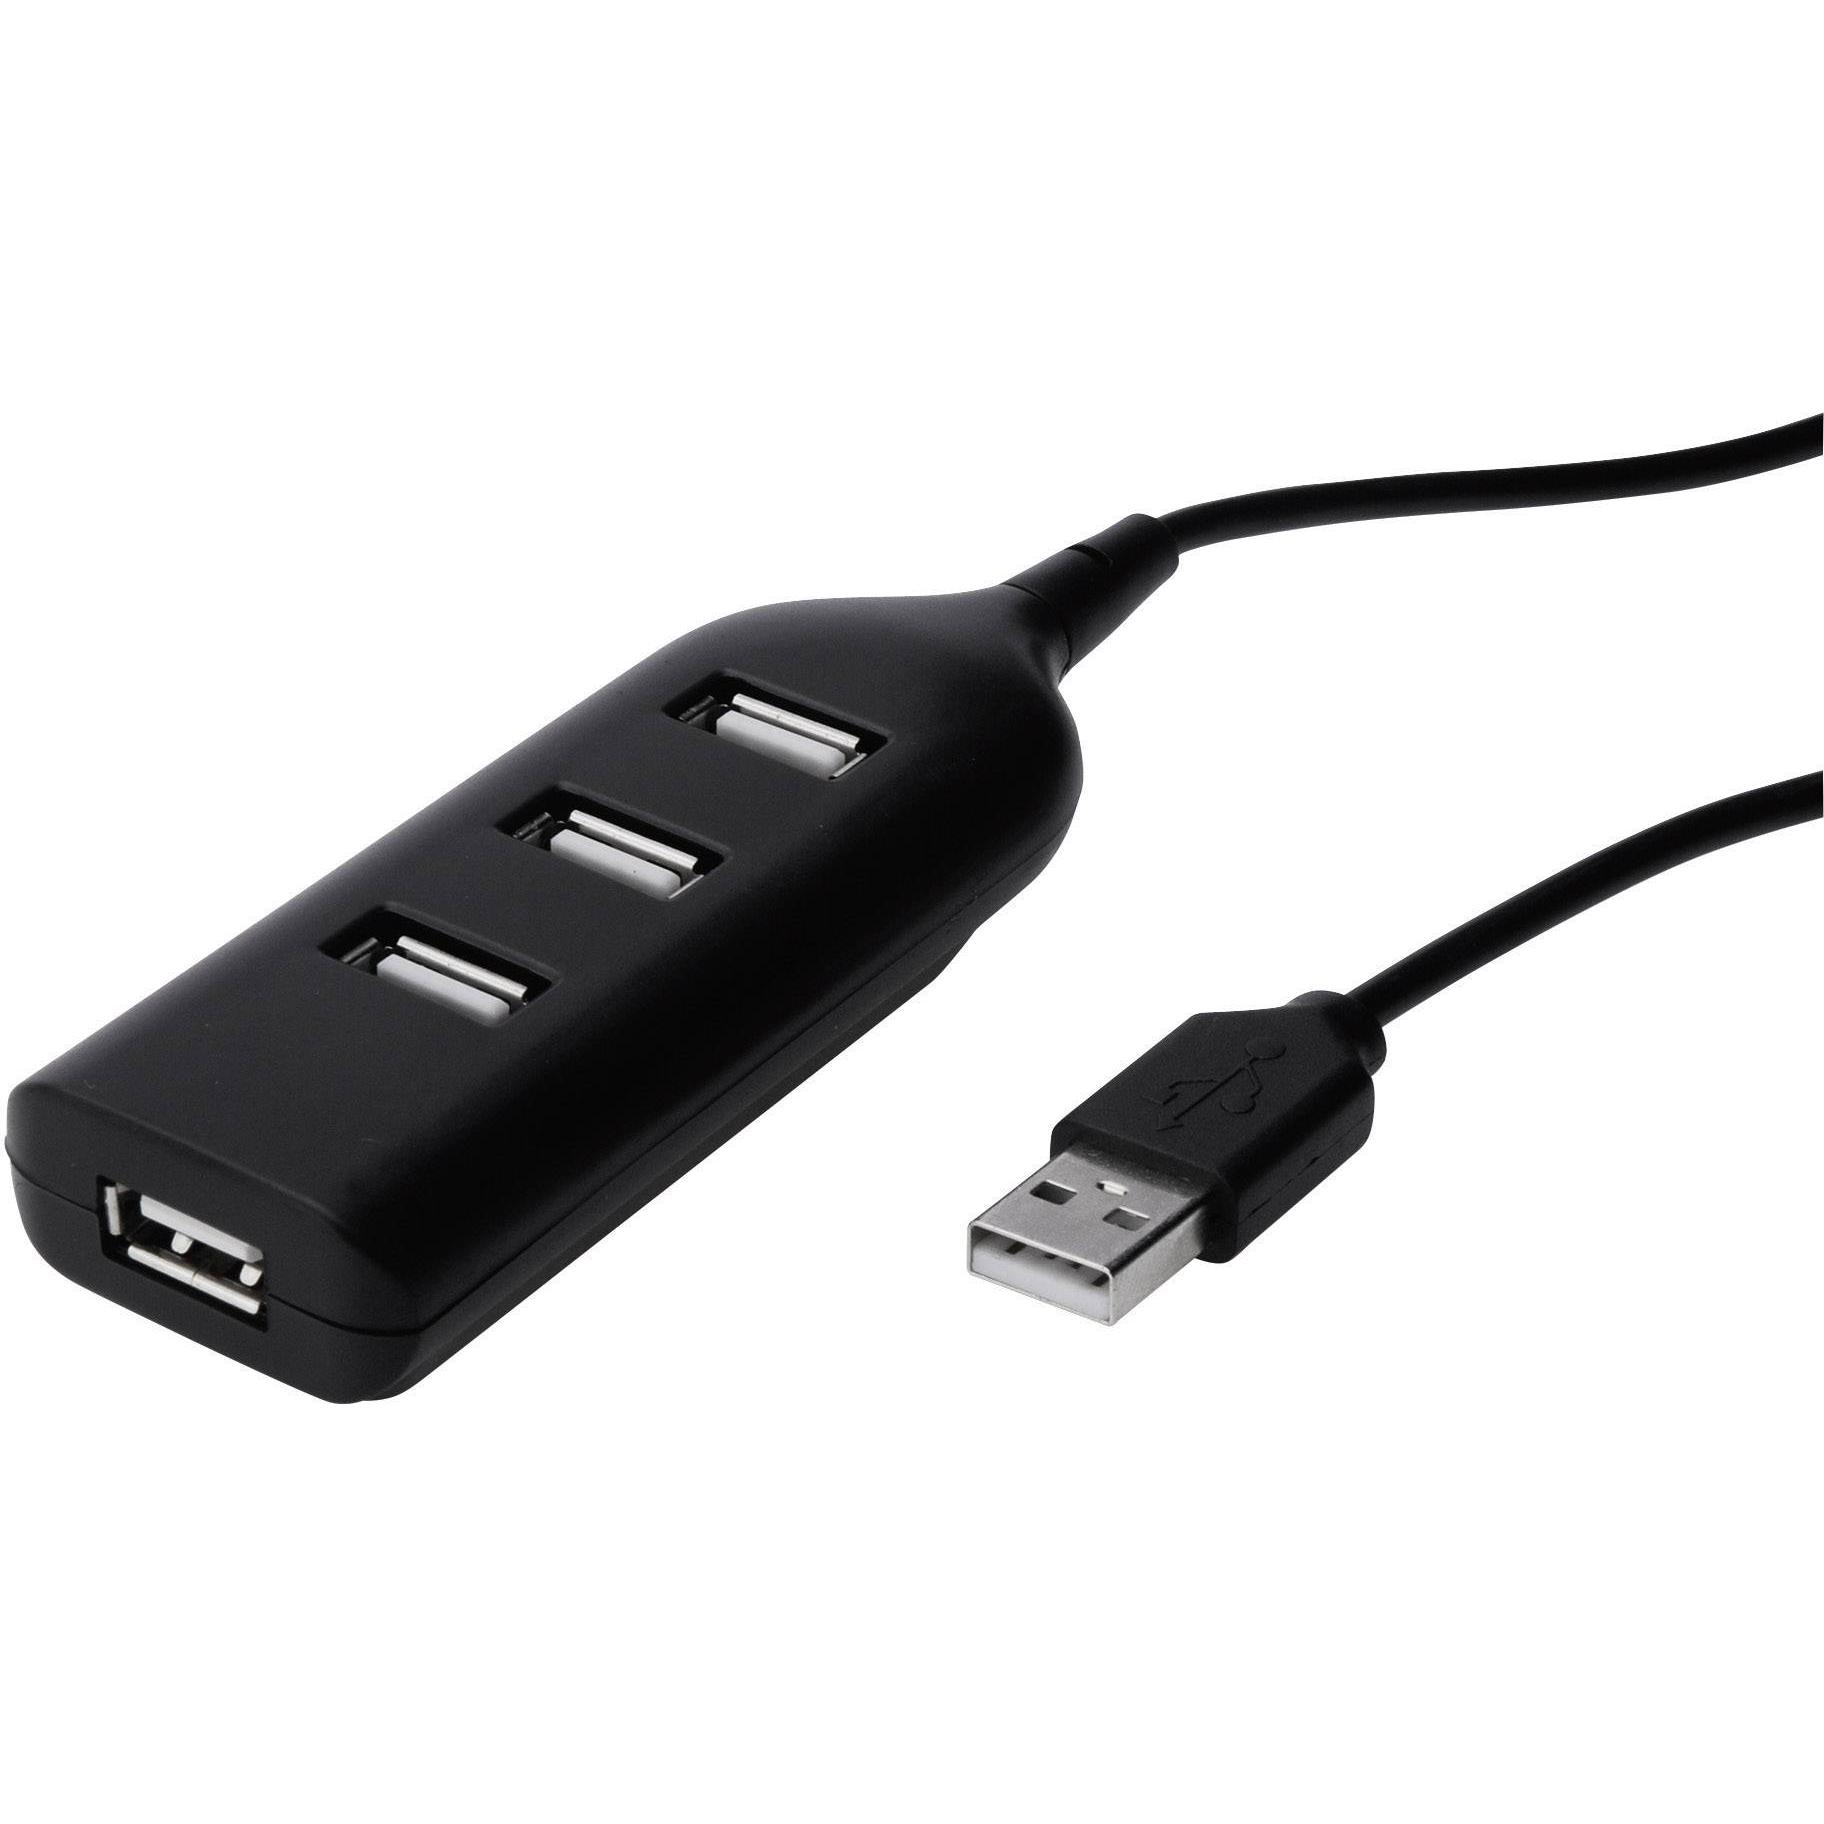 Usb 4 канала. Порт USB 2.0. USB 2.0 Hub USB. USB Hub 2 порта. USB-концентратор Hi-Speed USB 2.0 4-Port Hub.